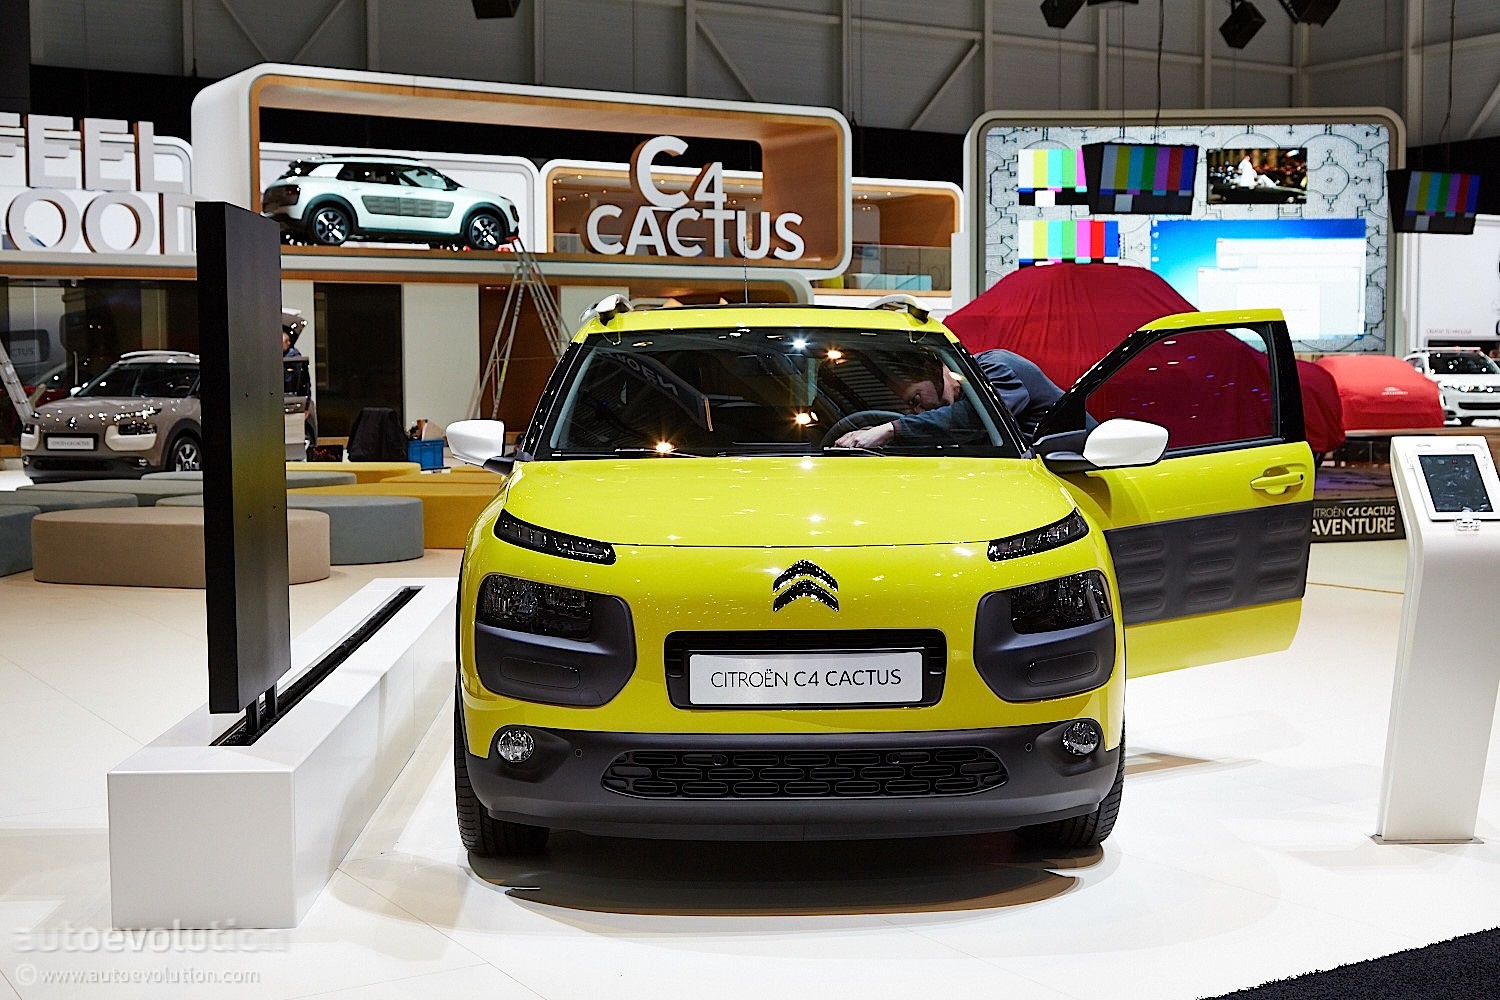 C4 Cactus and C4 Cactus Adventure Liven Up Citroën's Geneva Stand [w/Video], Carscoops